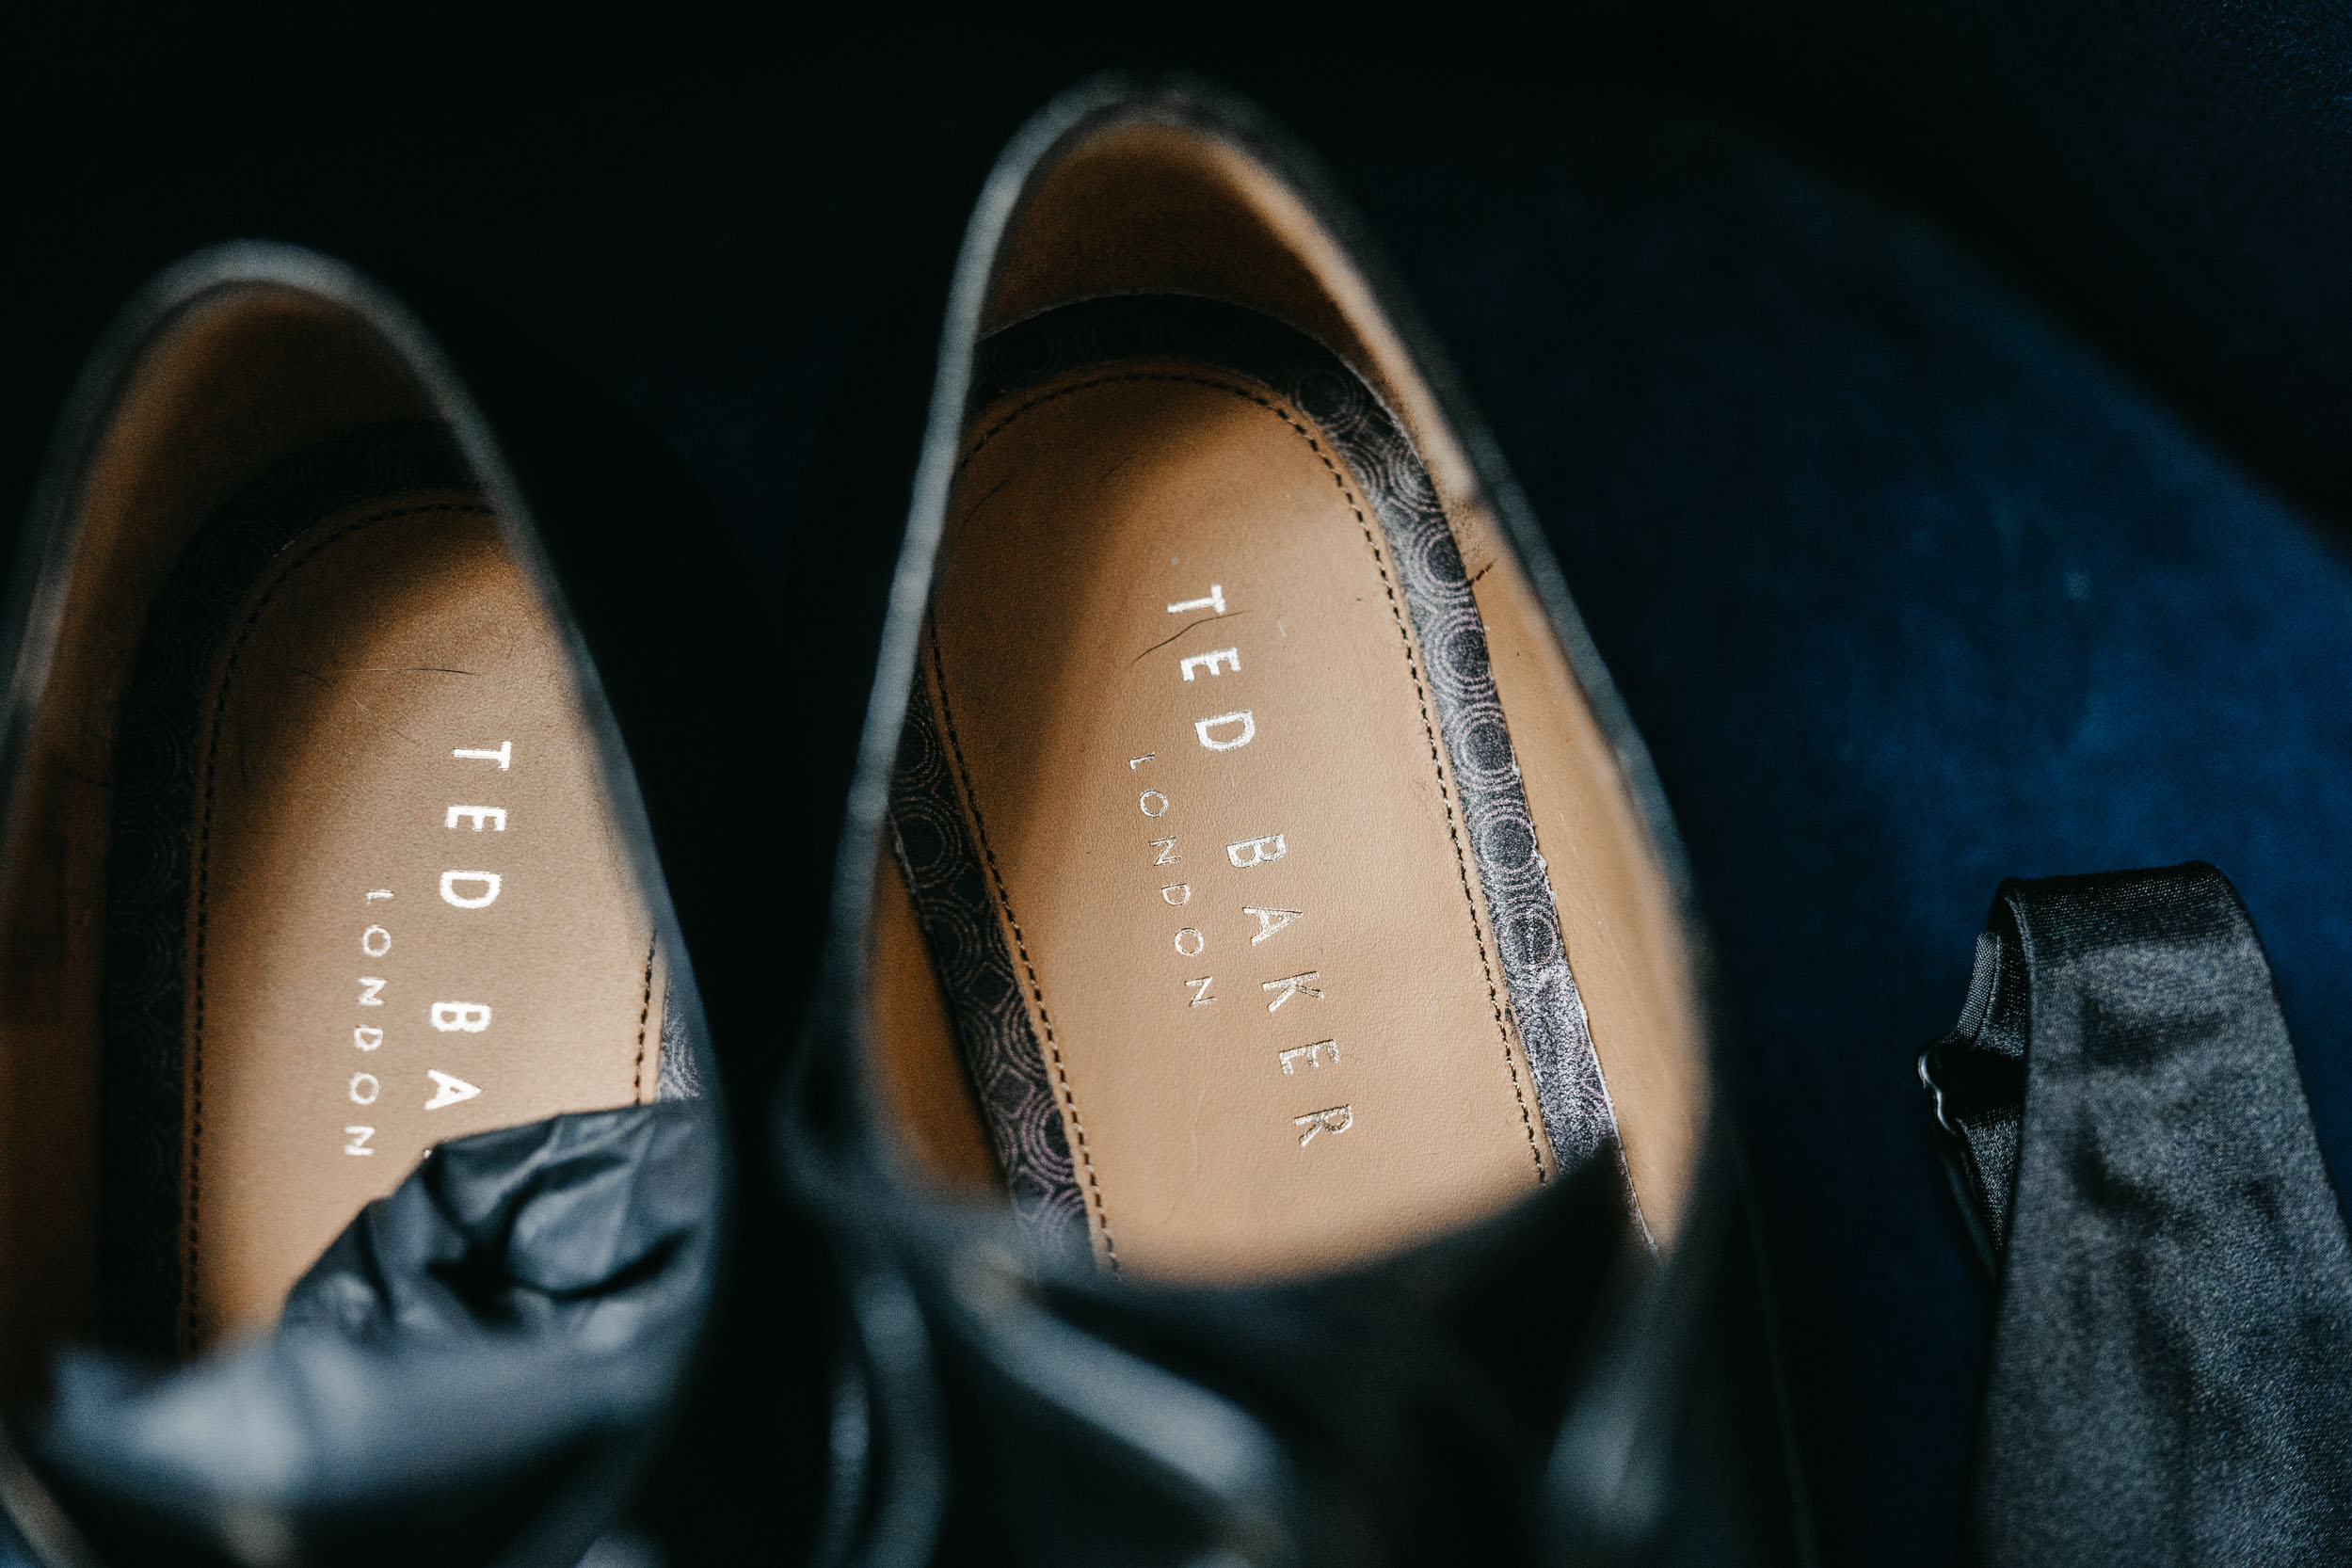 Ted Baker groom's shoes made of black leather on top of blue velvet